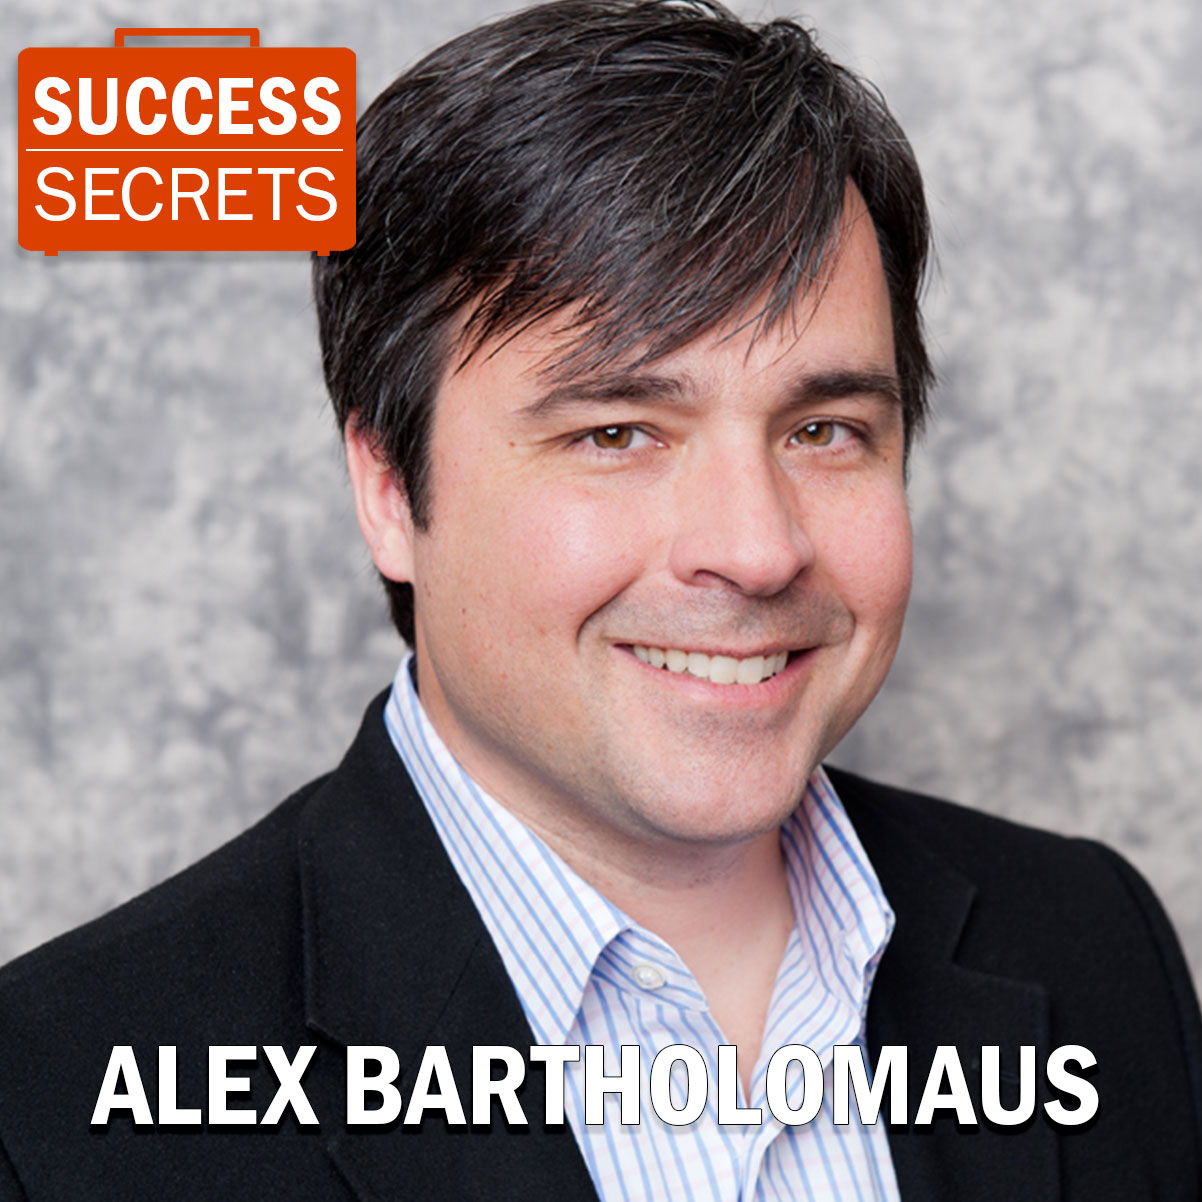 Alex Bartholomaus on the Endurance Executive & Elite Performance